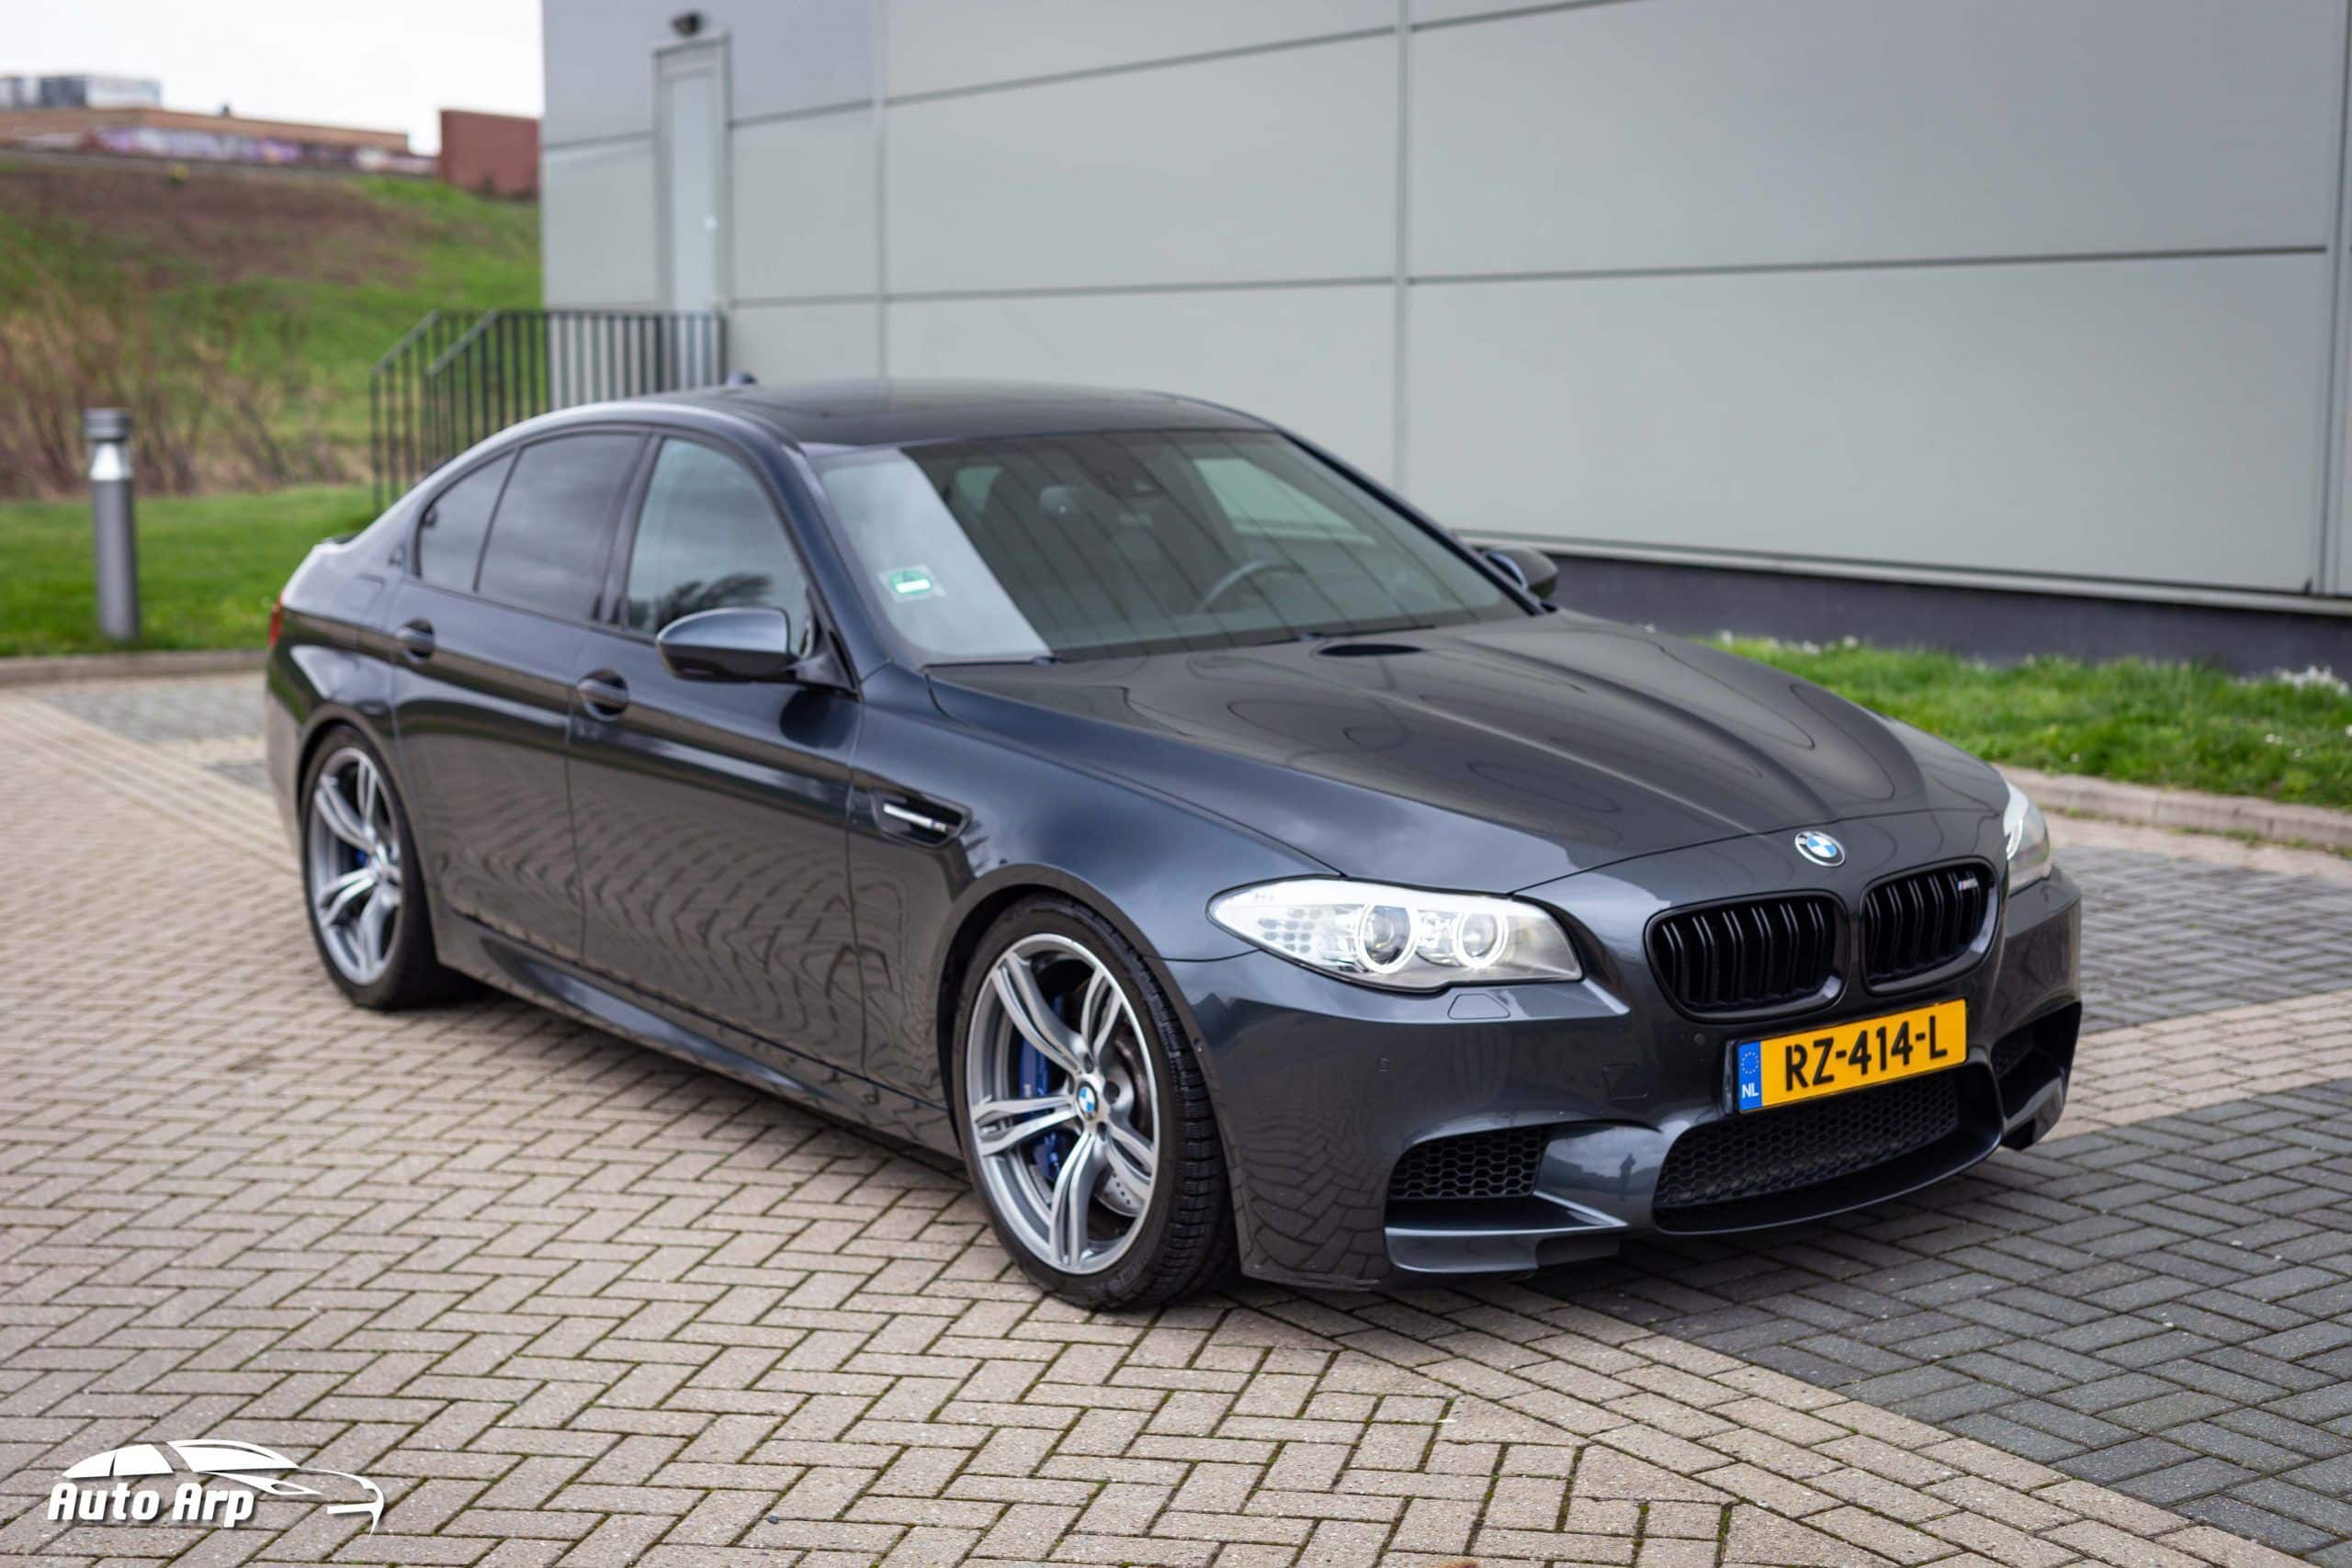 https://www.autoarp.nl/wp-content/uploads/2020/02/BMW-M5-4-van-33-scaled.jpg